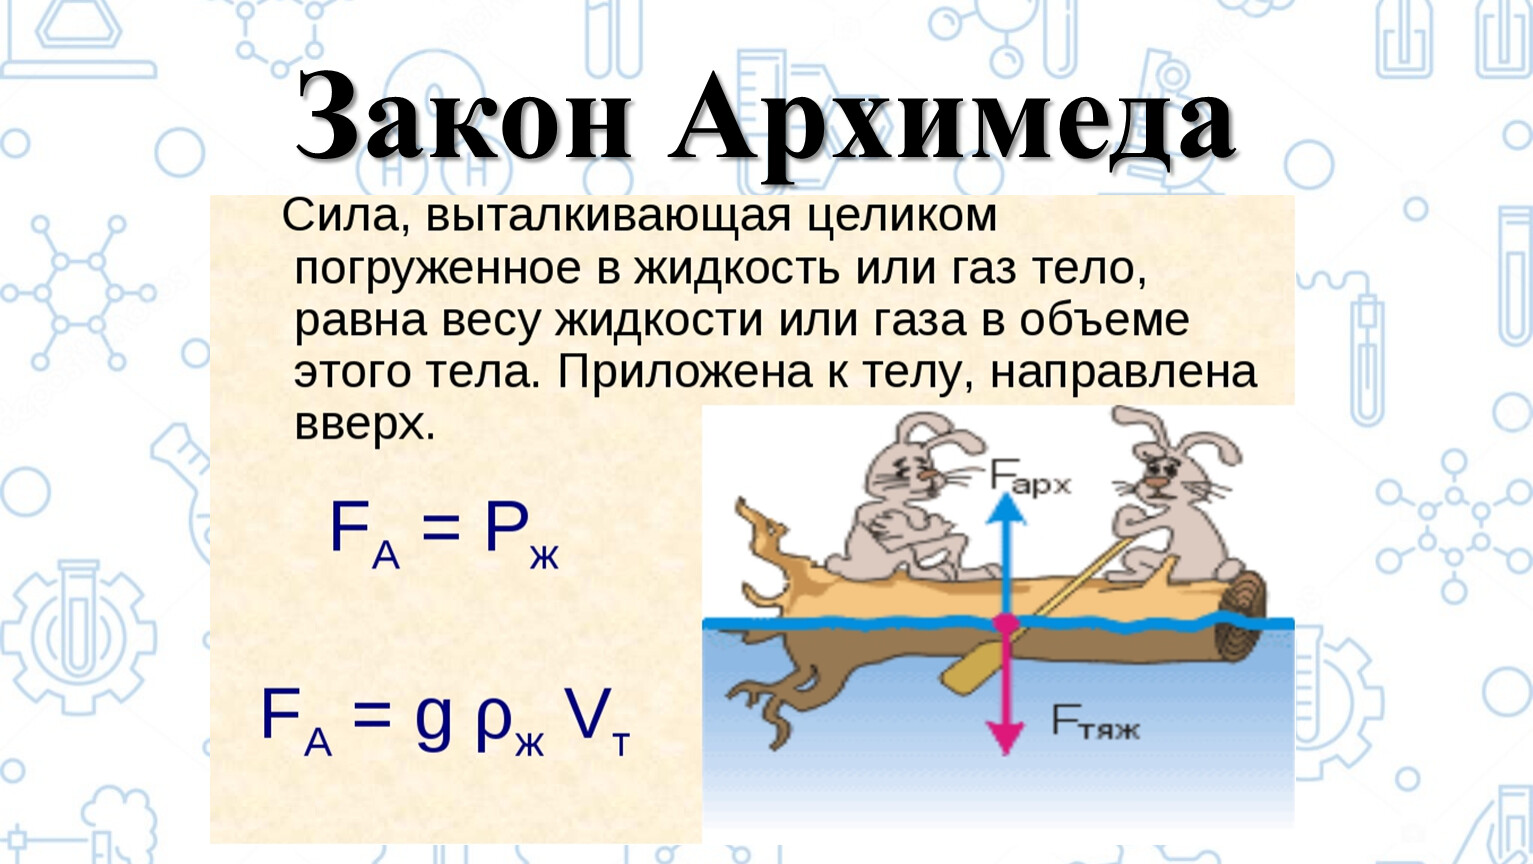 2 формулы архимеда. Формулы по физике 7 класс сила Архимеда. Сила Архимеда формула 7 класс. Сила Архимеда 7 класс физика. Закон Архимеда 7 класс физика формула.